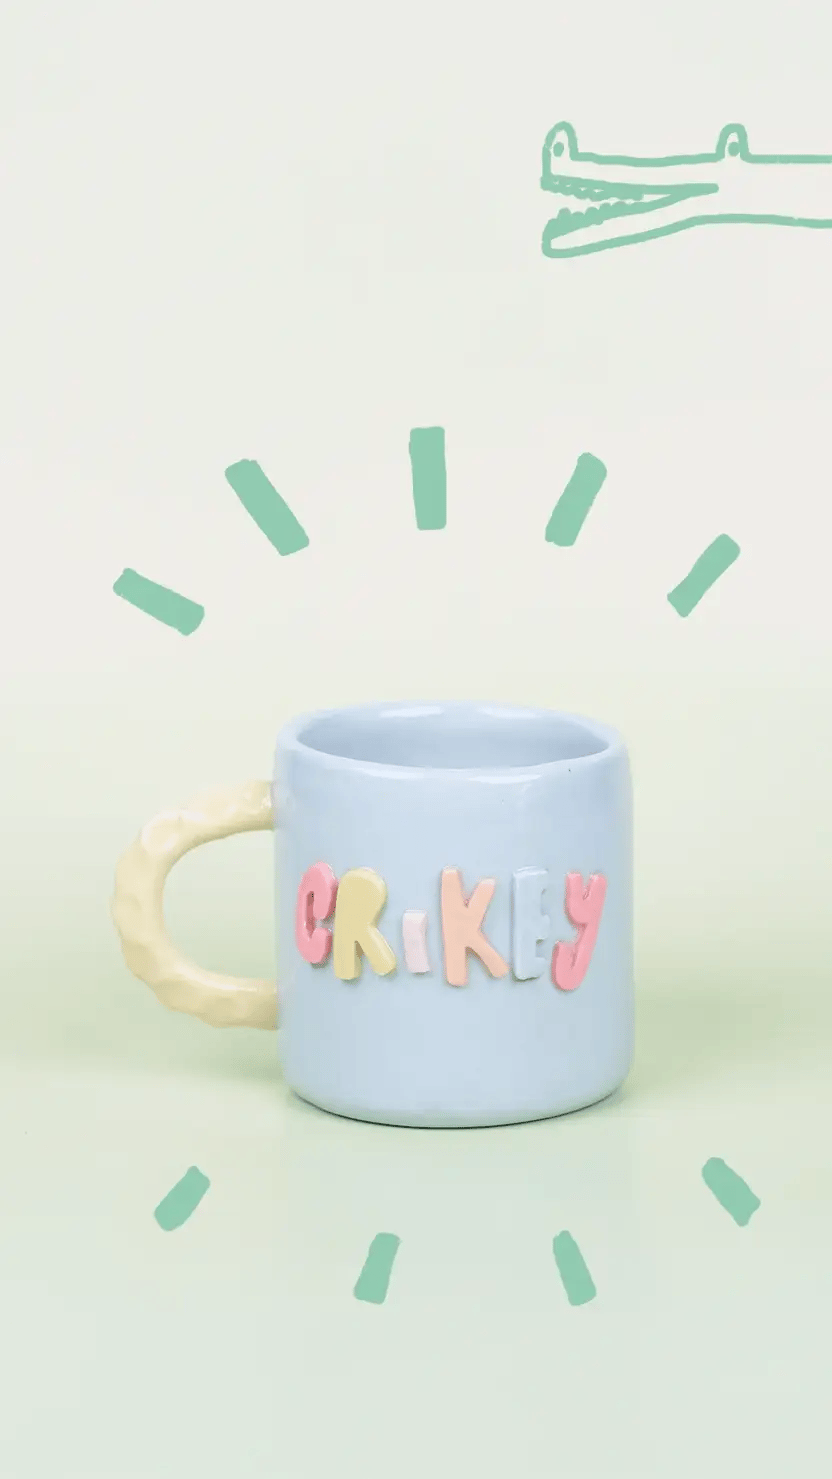 Crikey | Big Mug